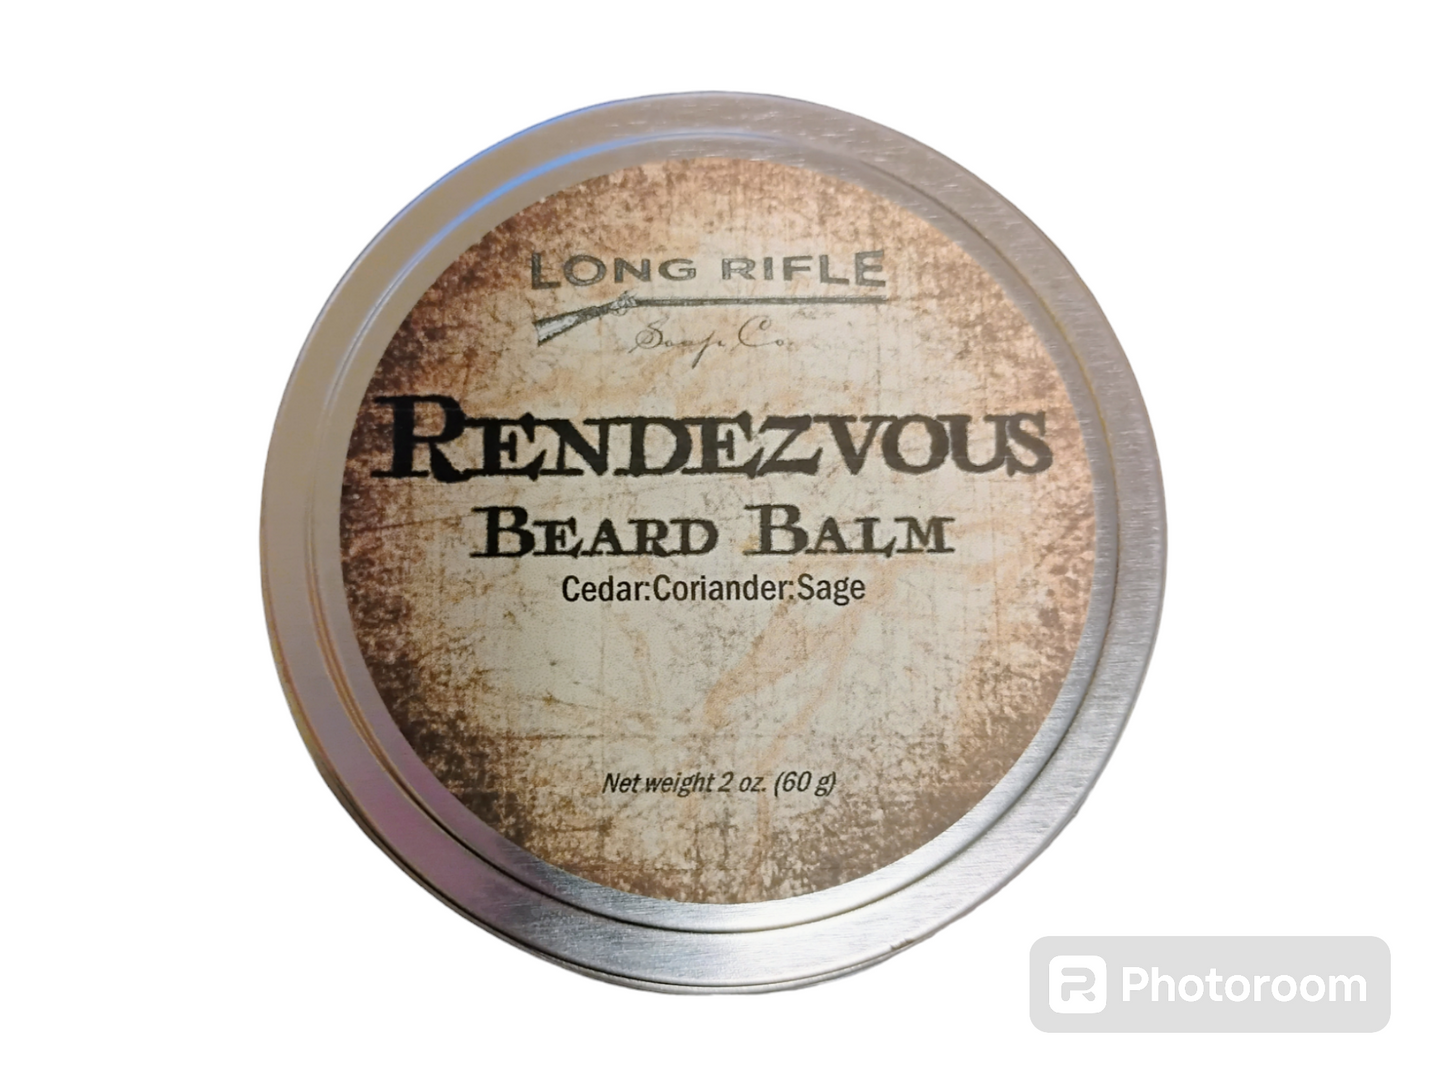 Rendezvous Beard Balm